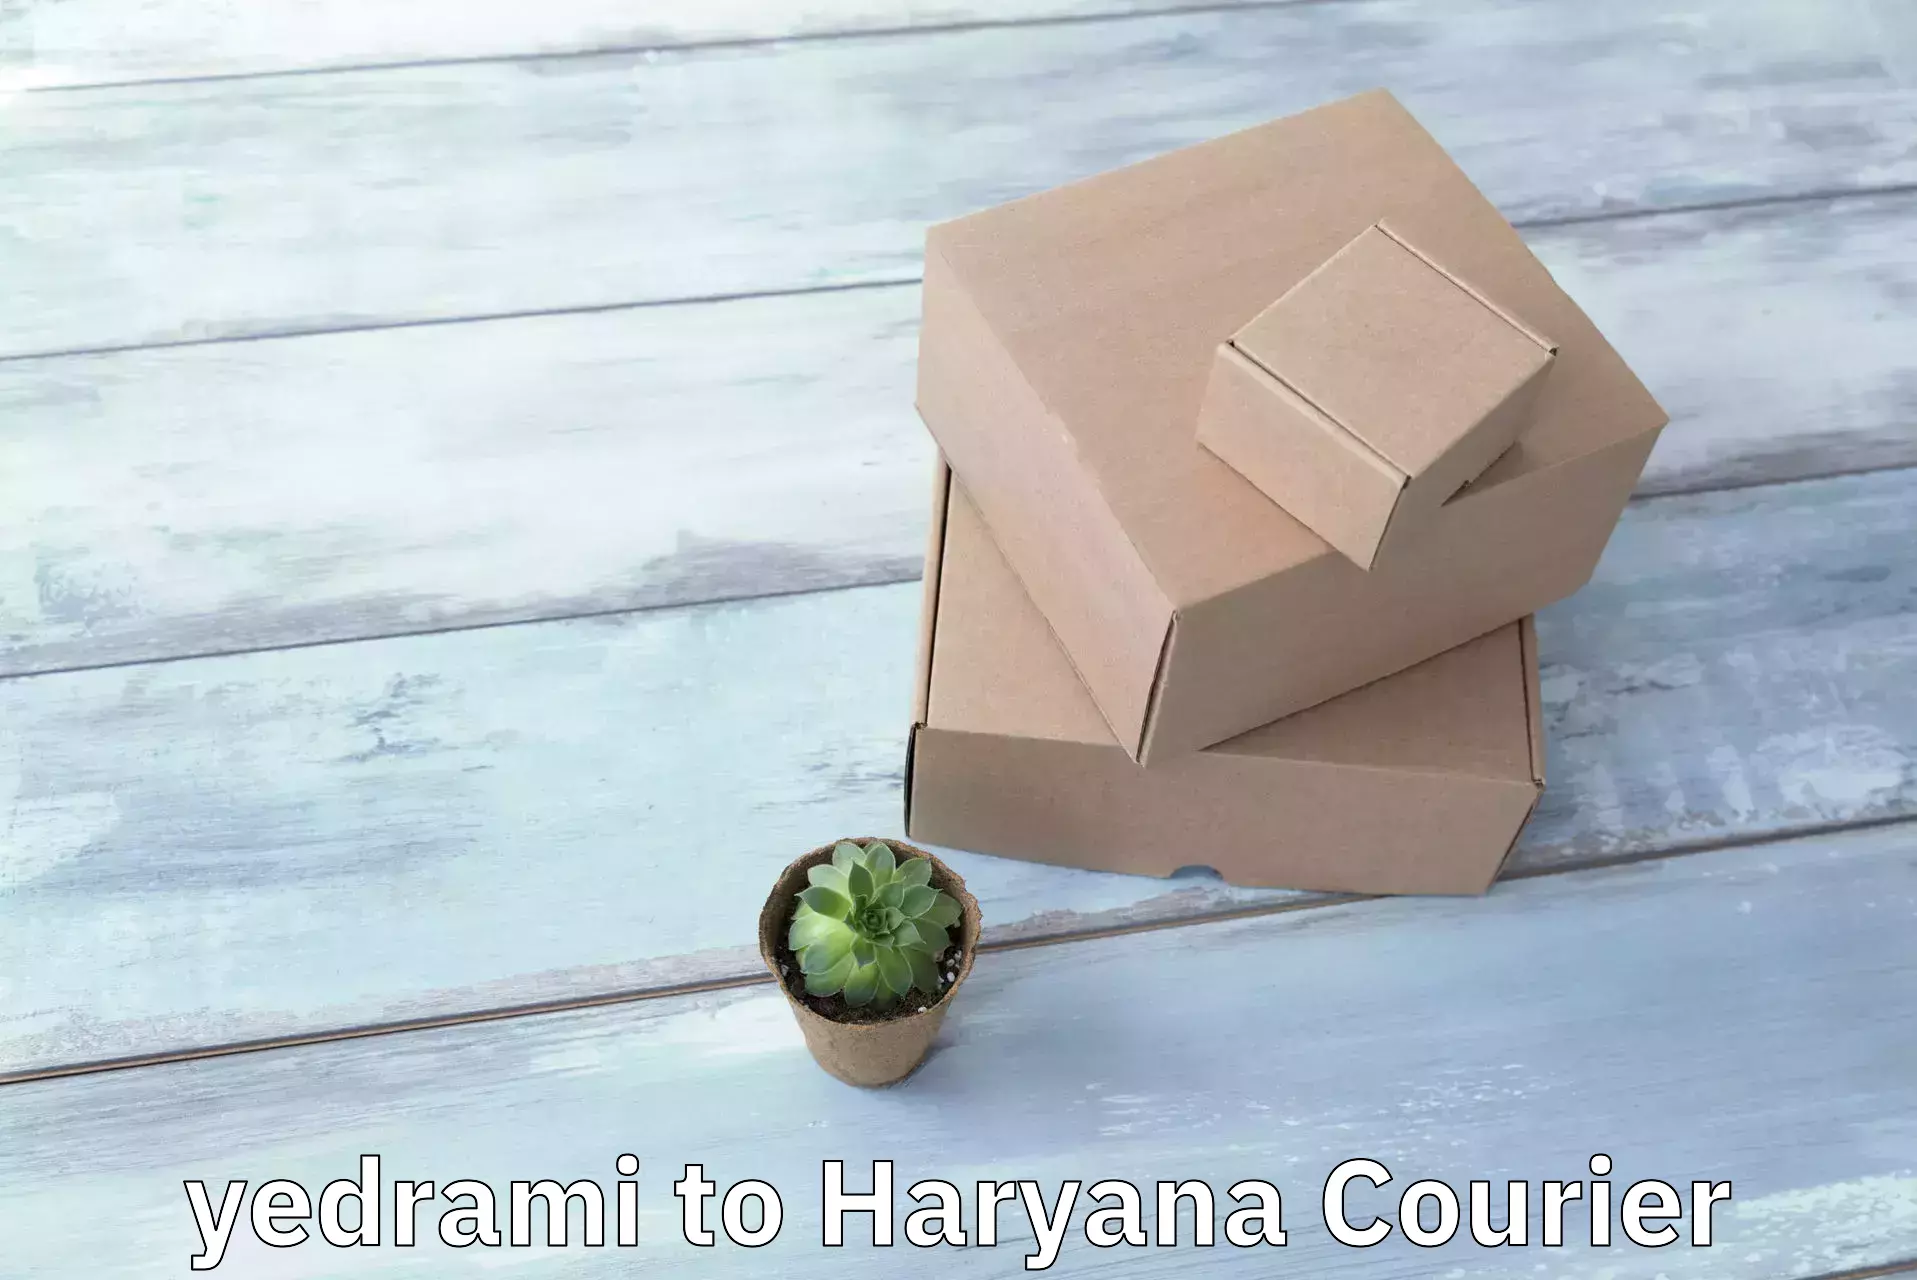 Bulk order courier yedrami to Gurugram